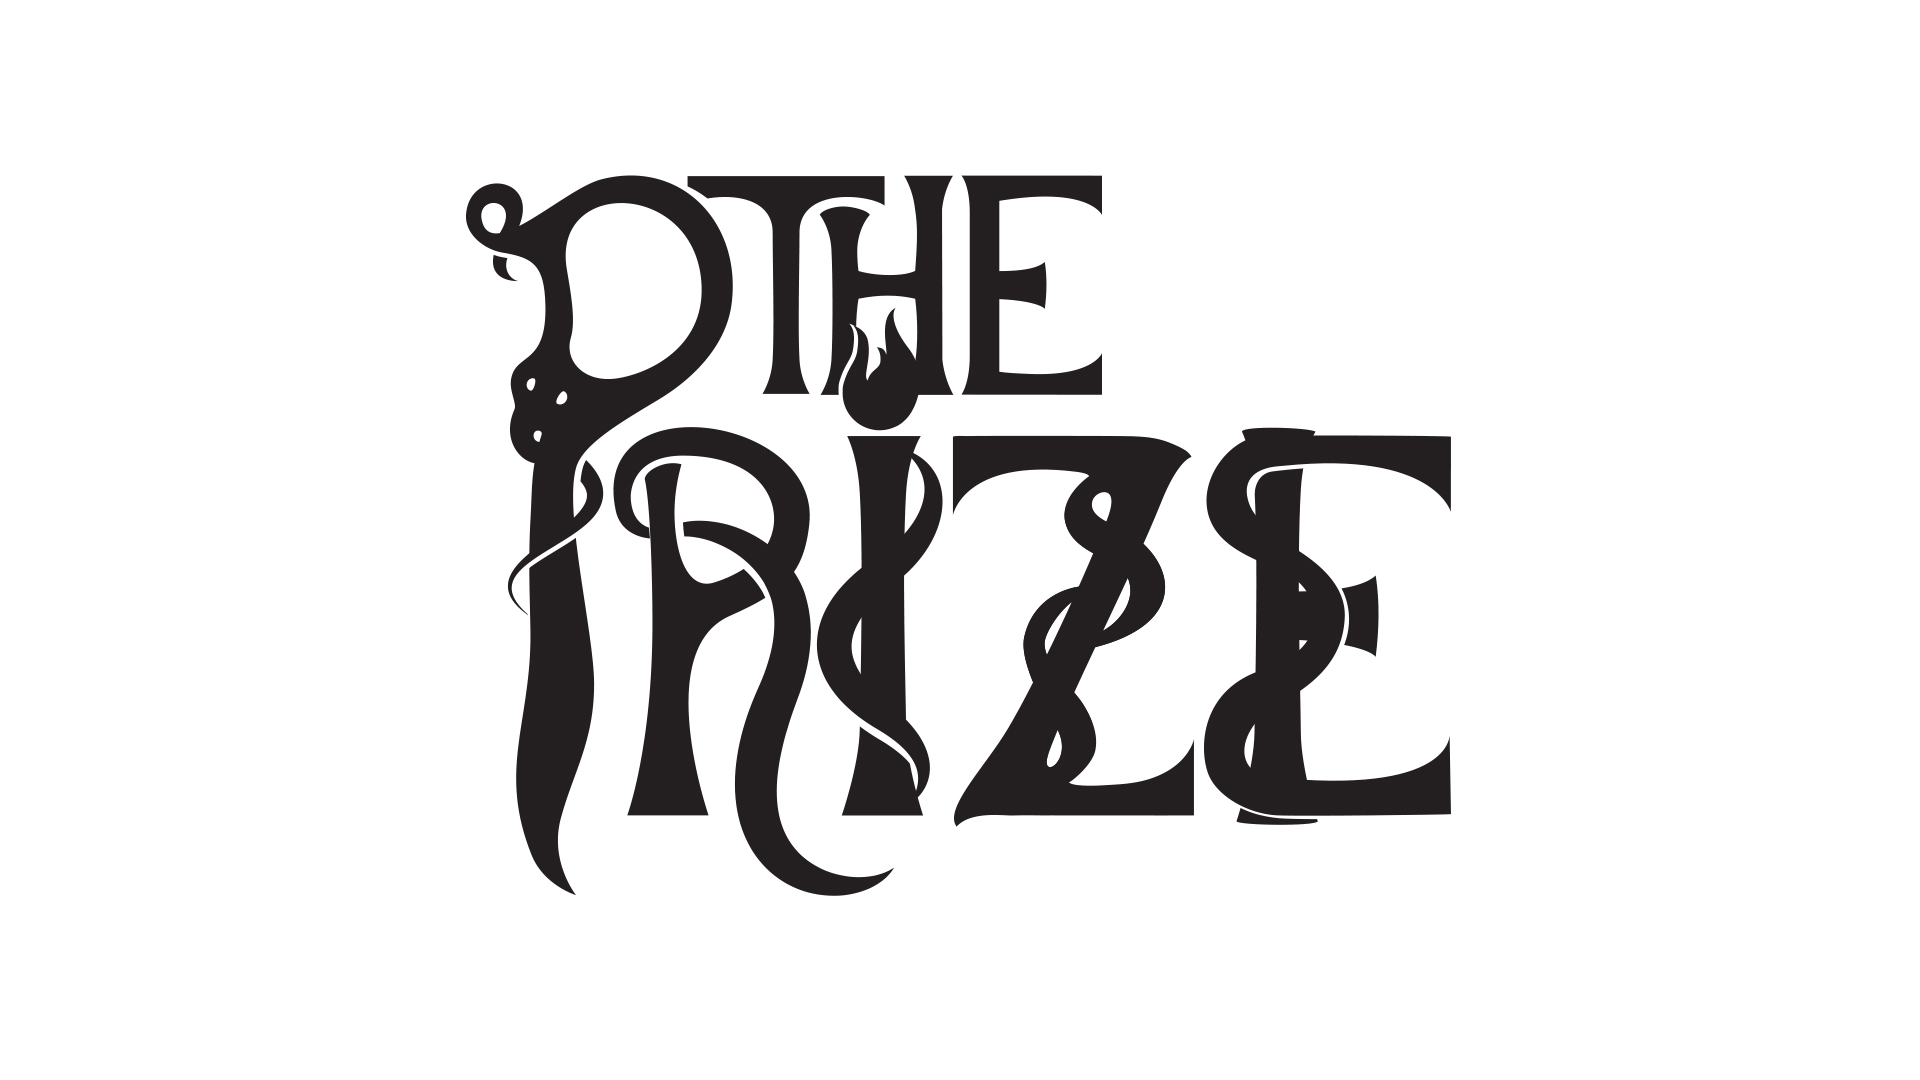 The prize logo